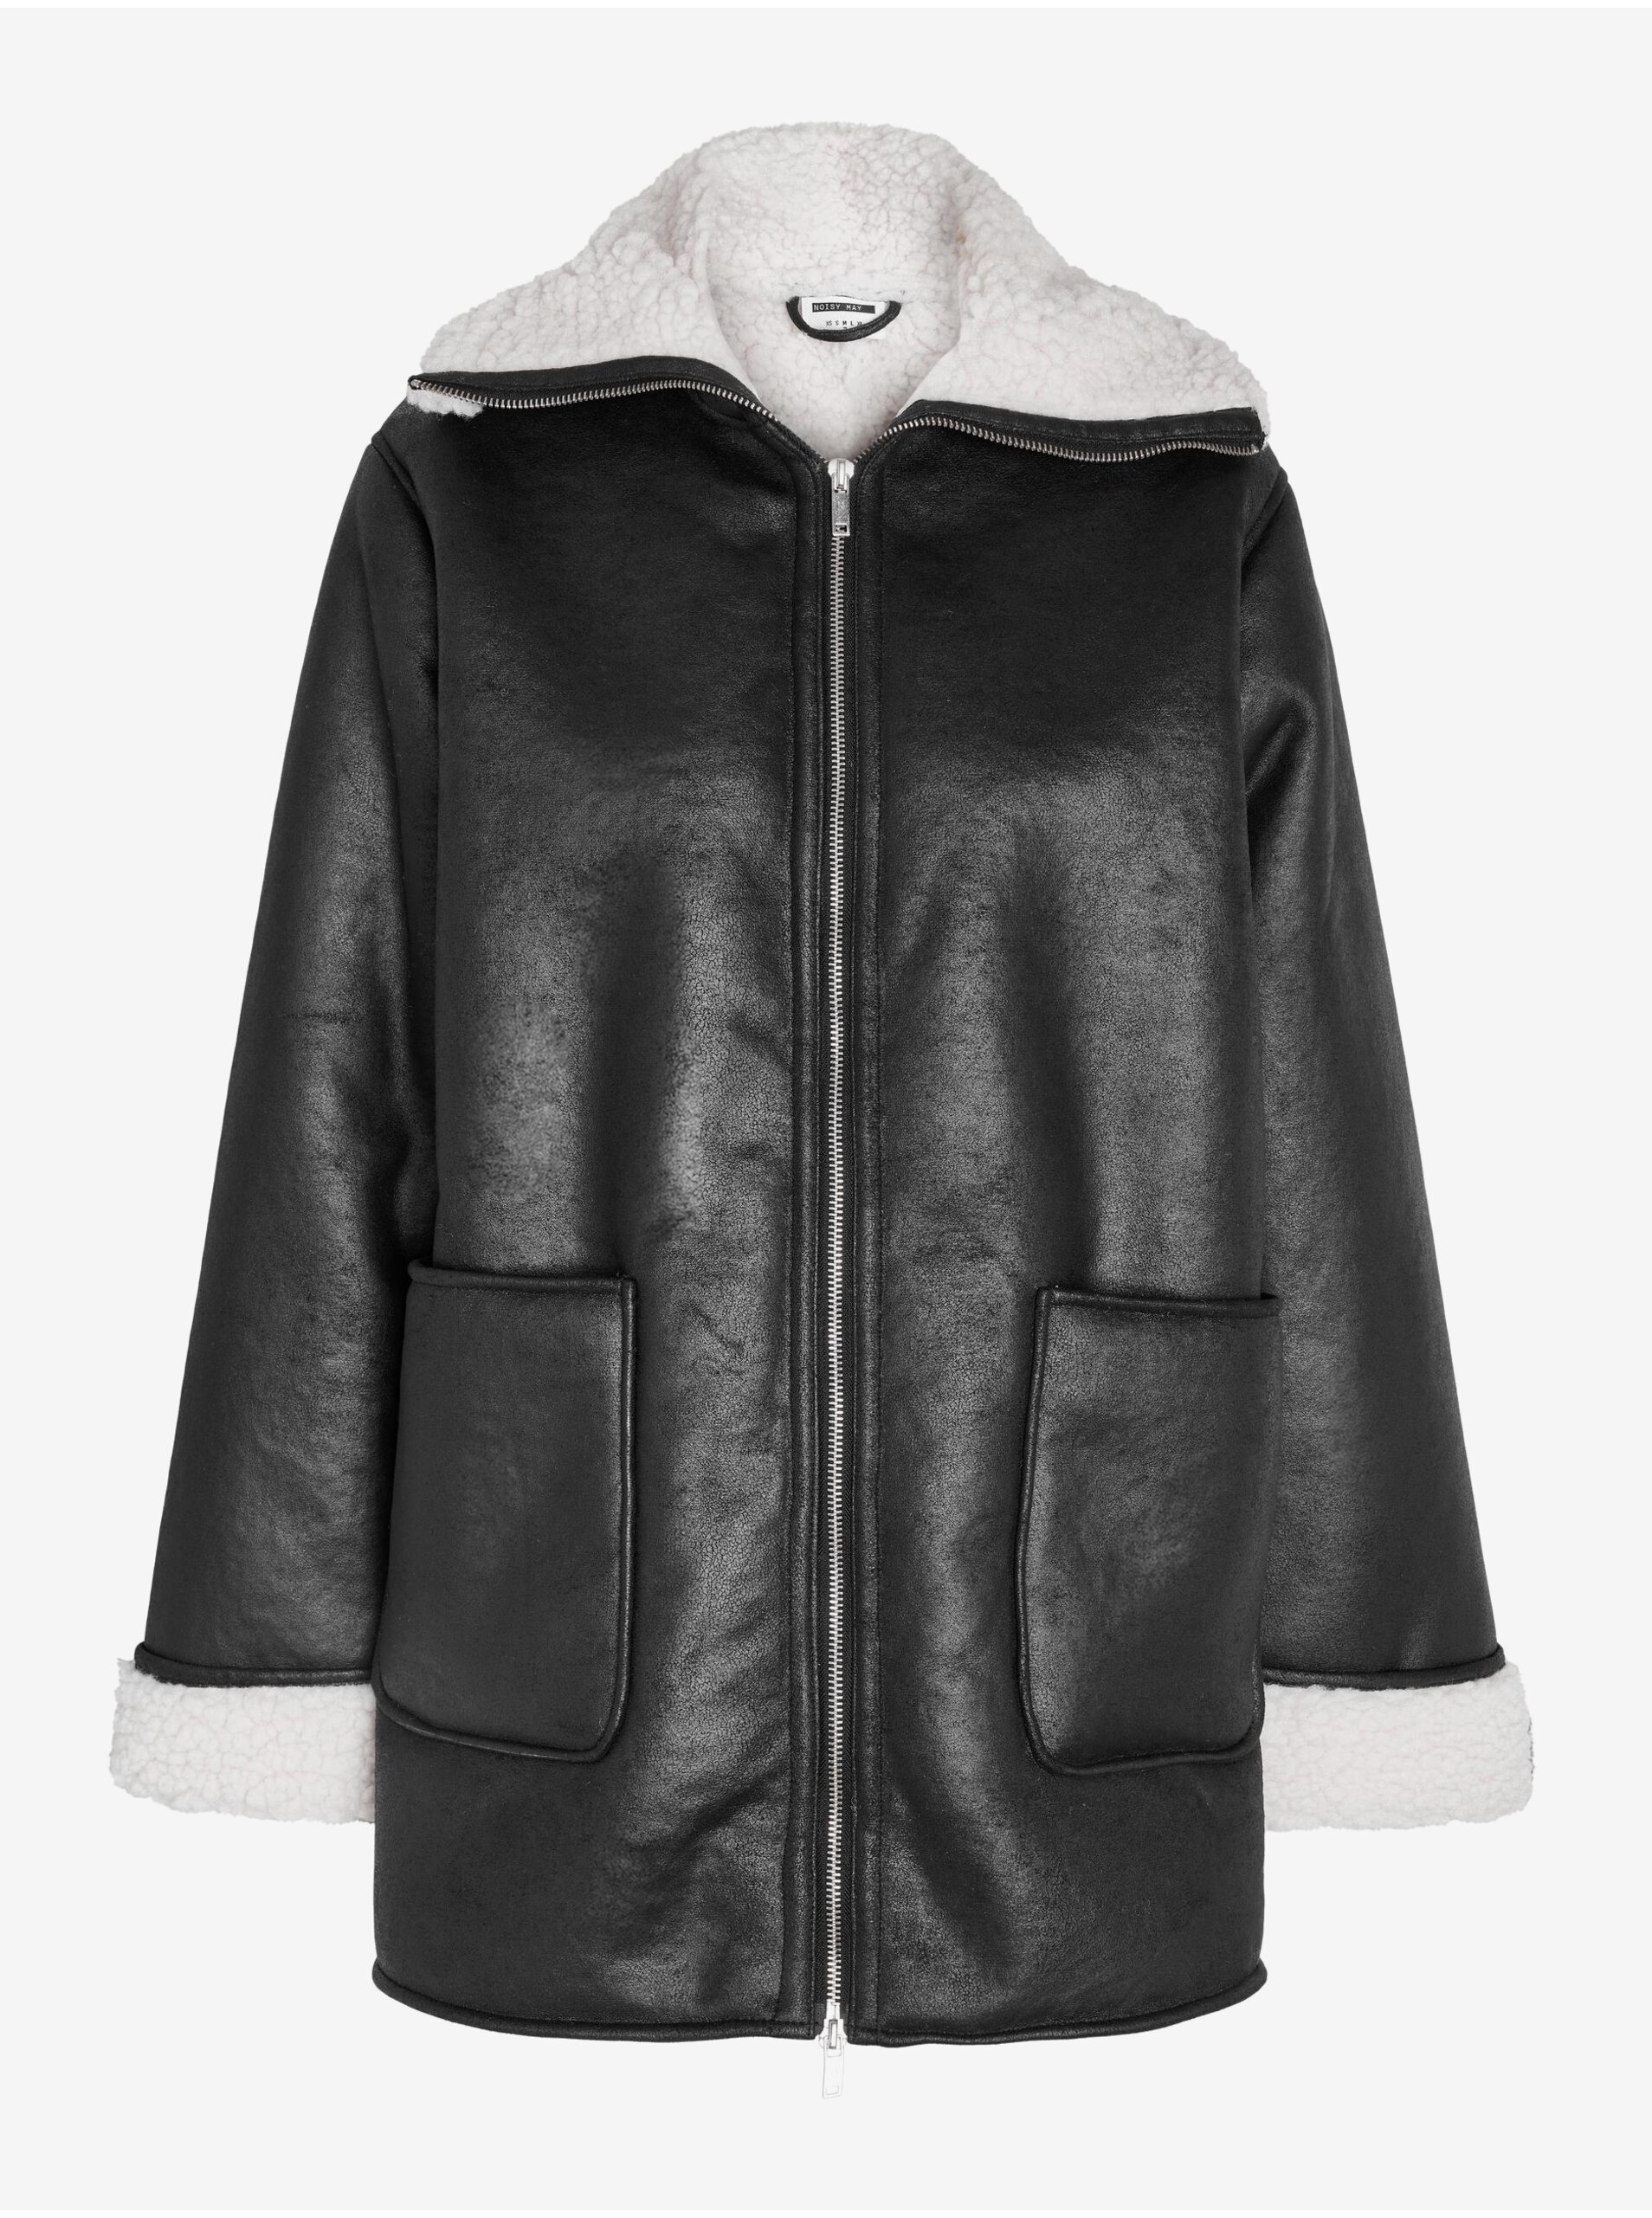 Black Leatherette Winter Jacket Noisy May H - Ladies